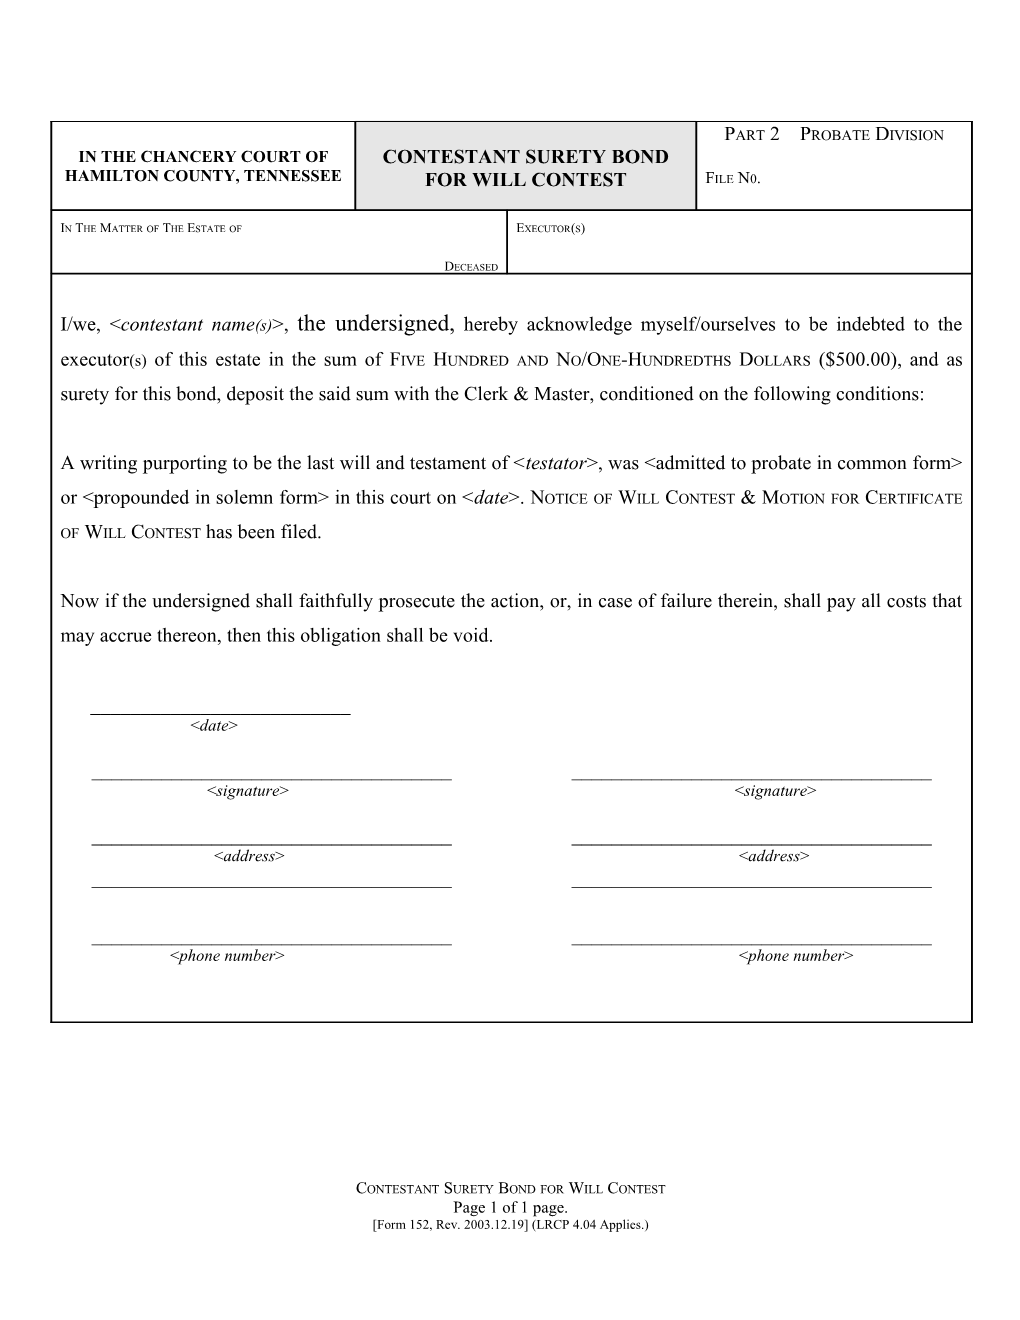 Form 153-Contest Surety Bond to Executor(S)